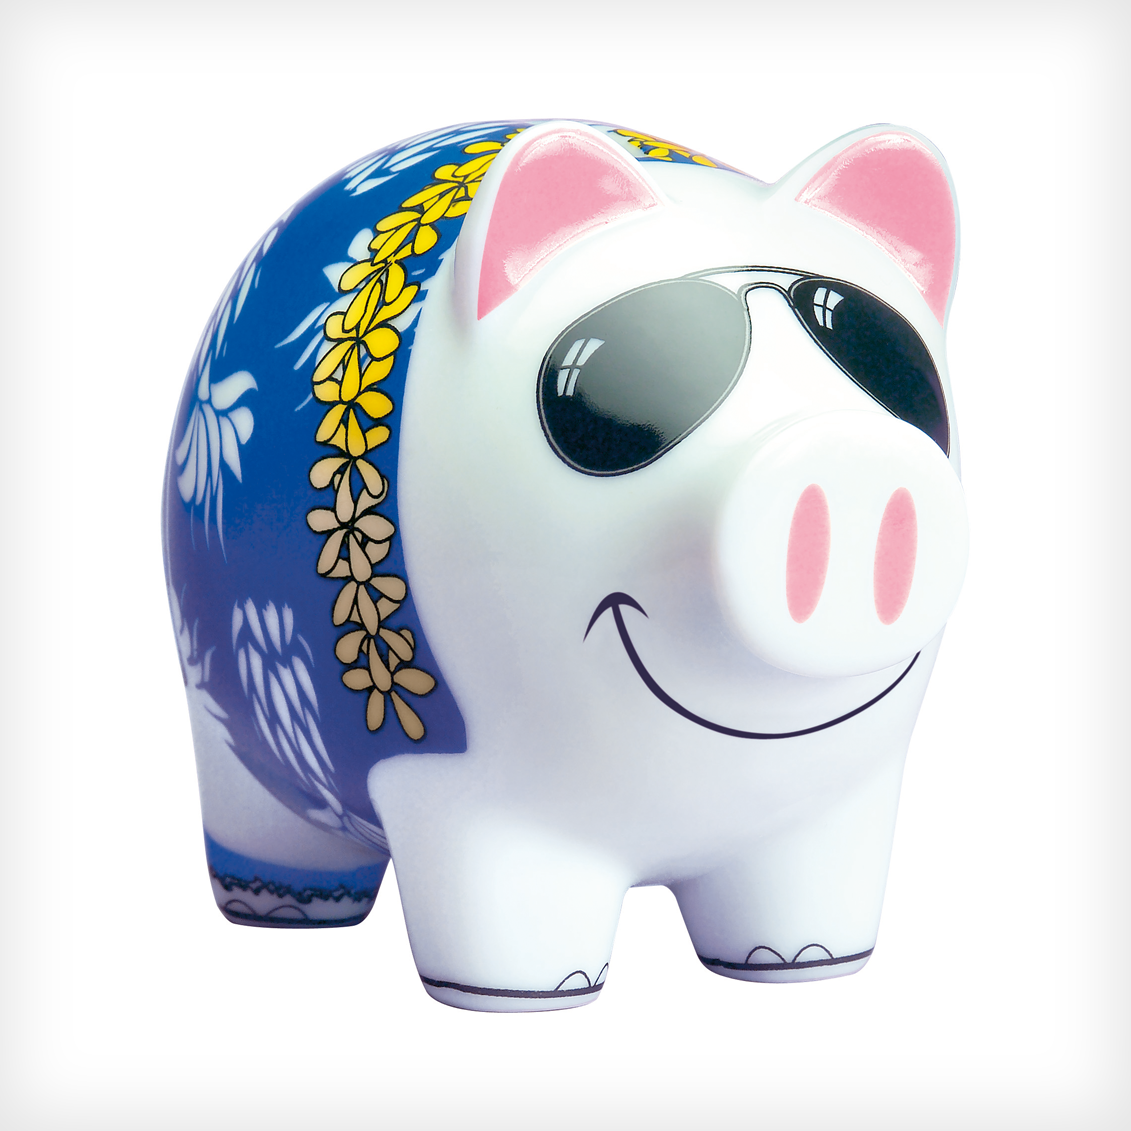 “Tourist” Mini Piggy Bank for Ritzenhoff